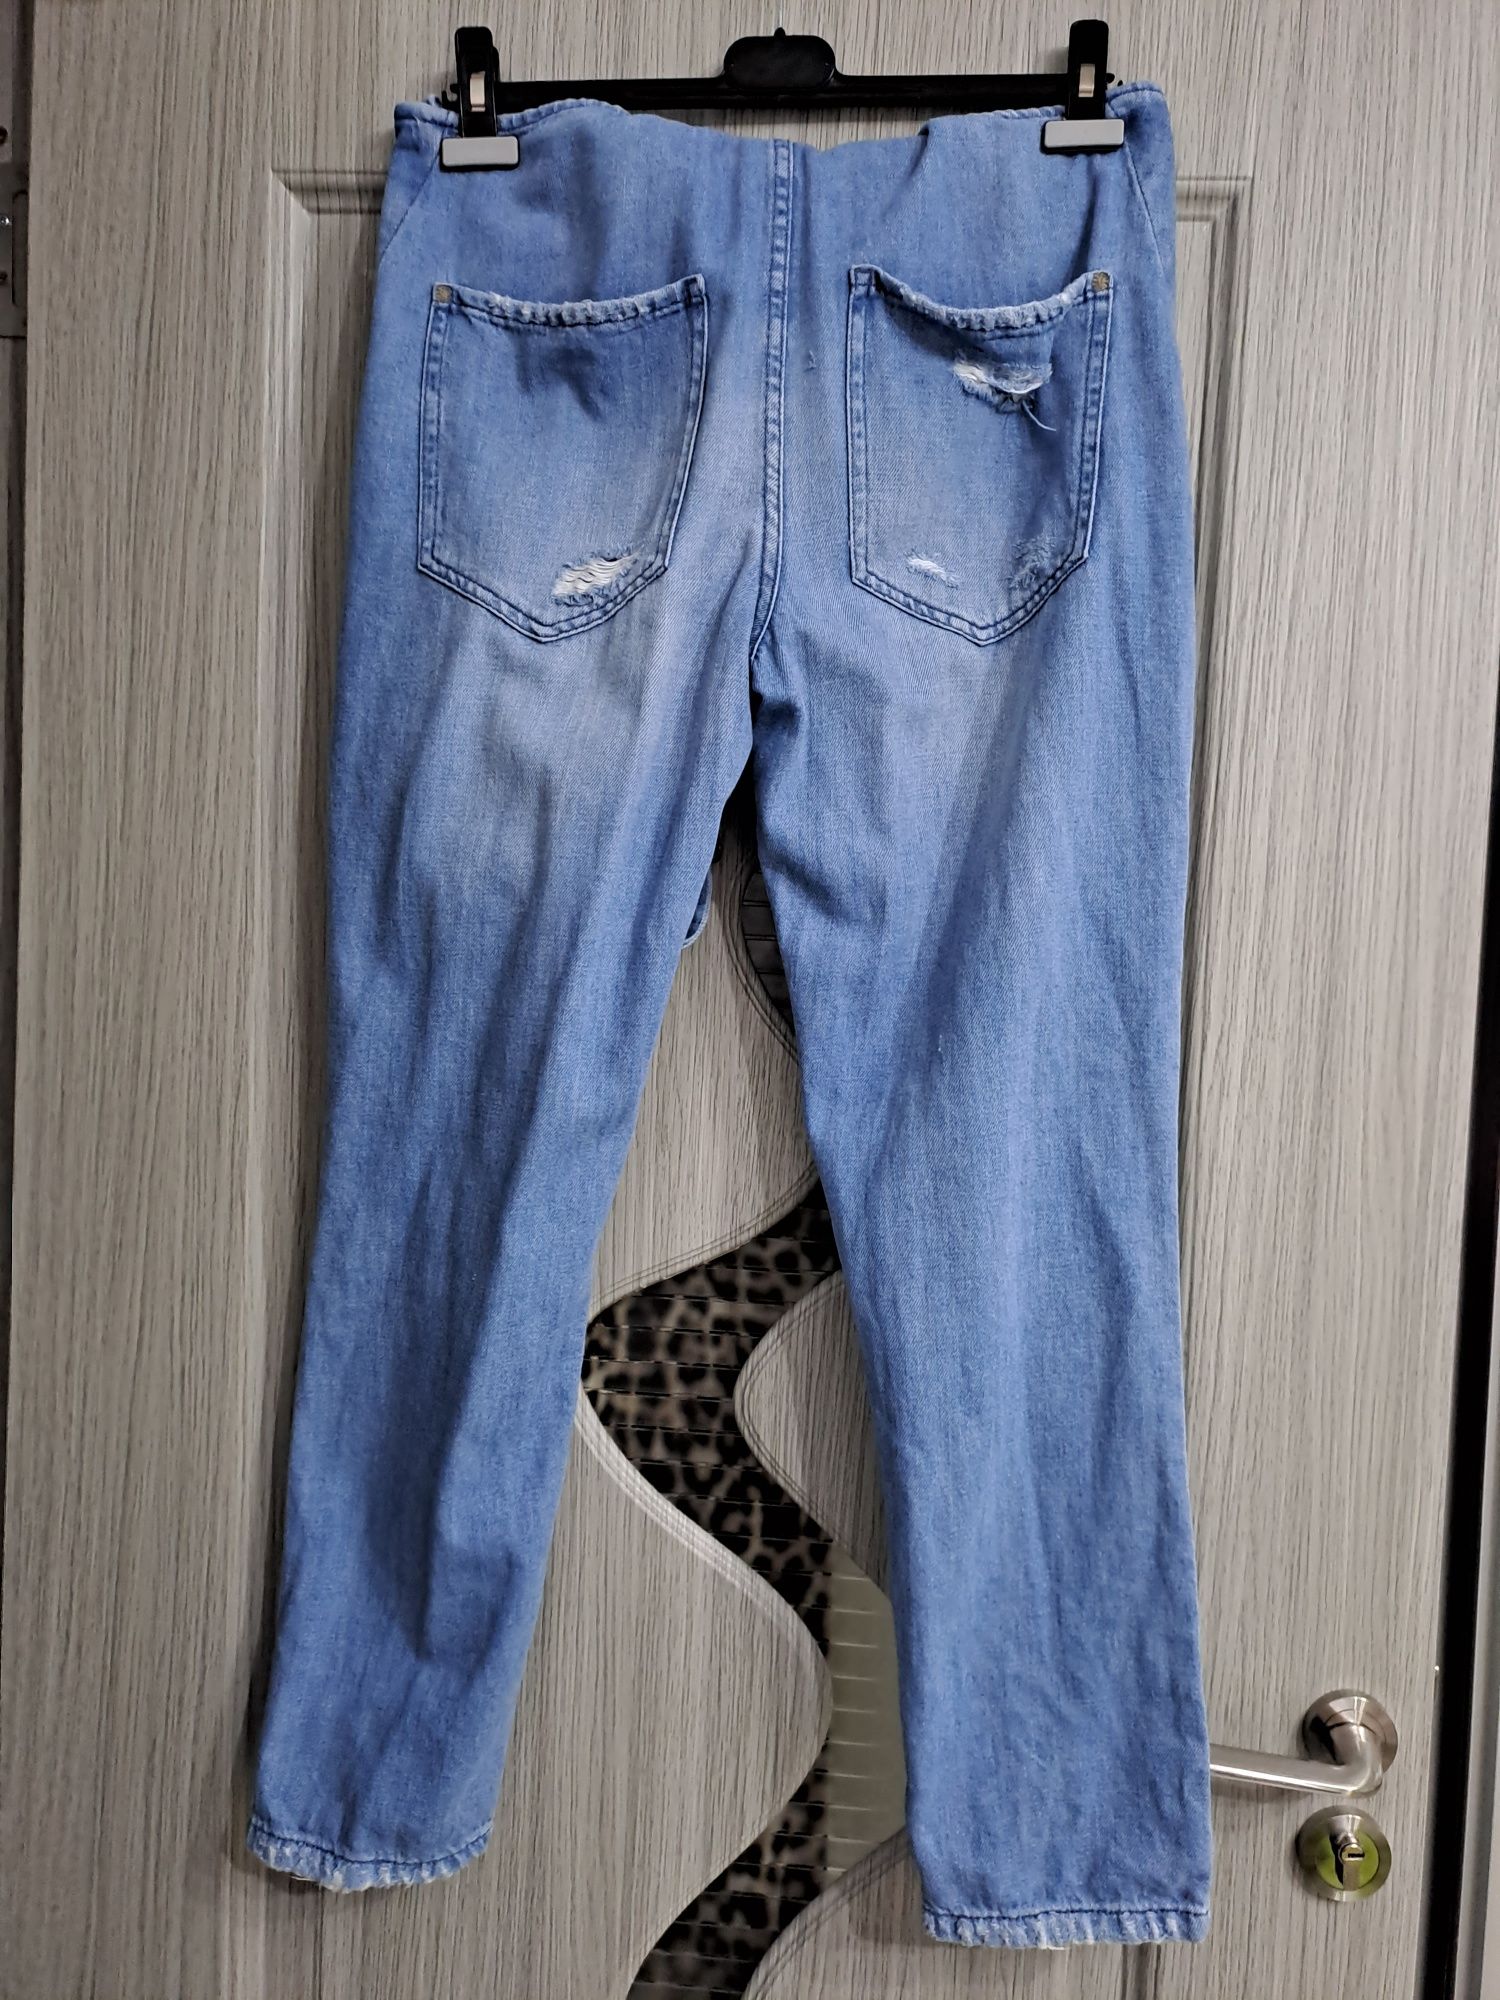 Salopeta jeans de femeie Zara marimea 36